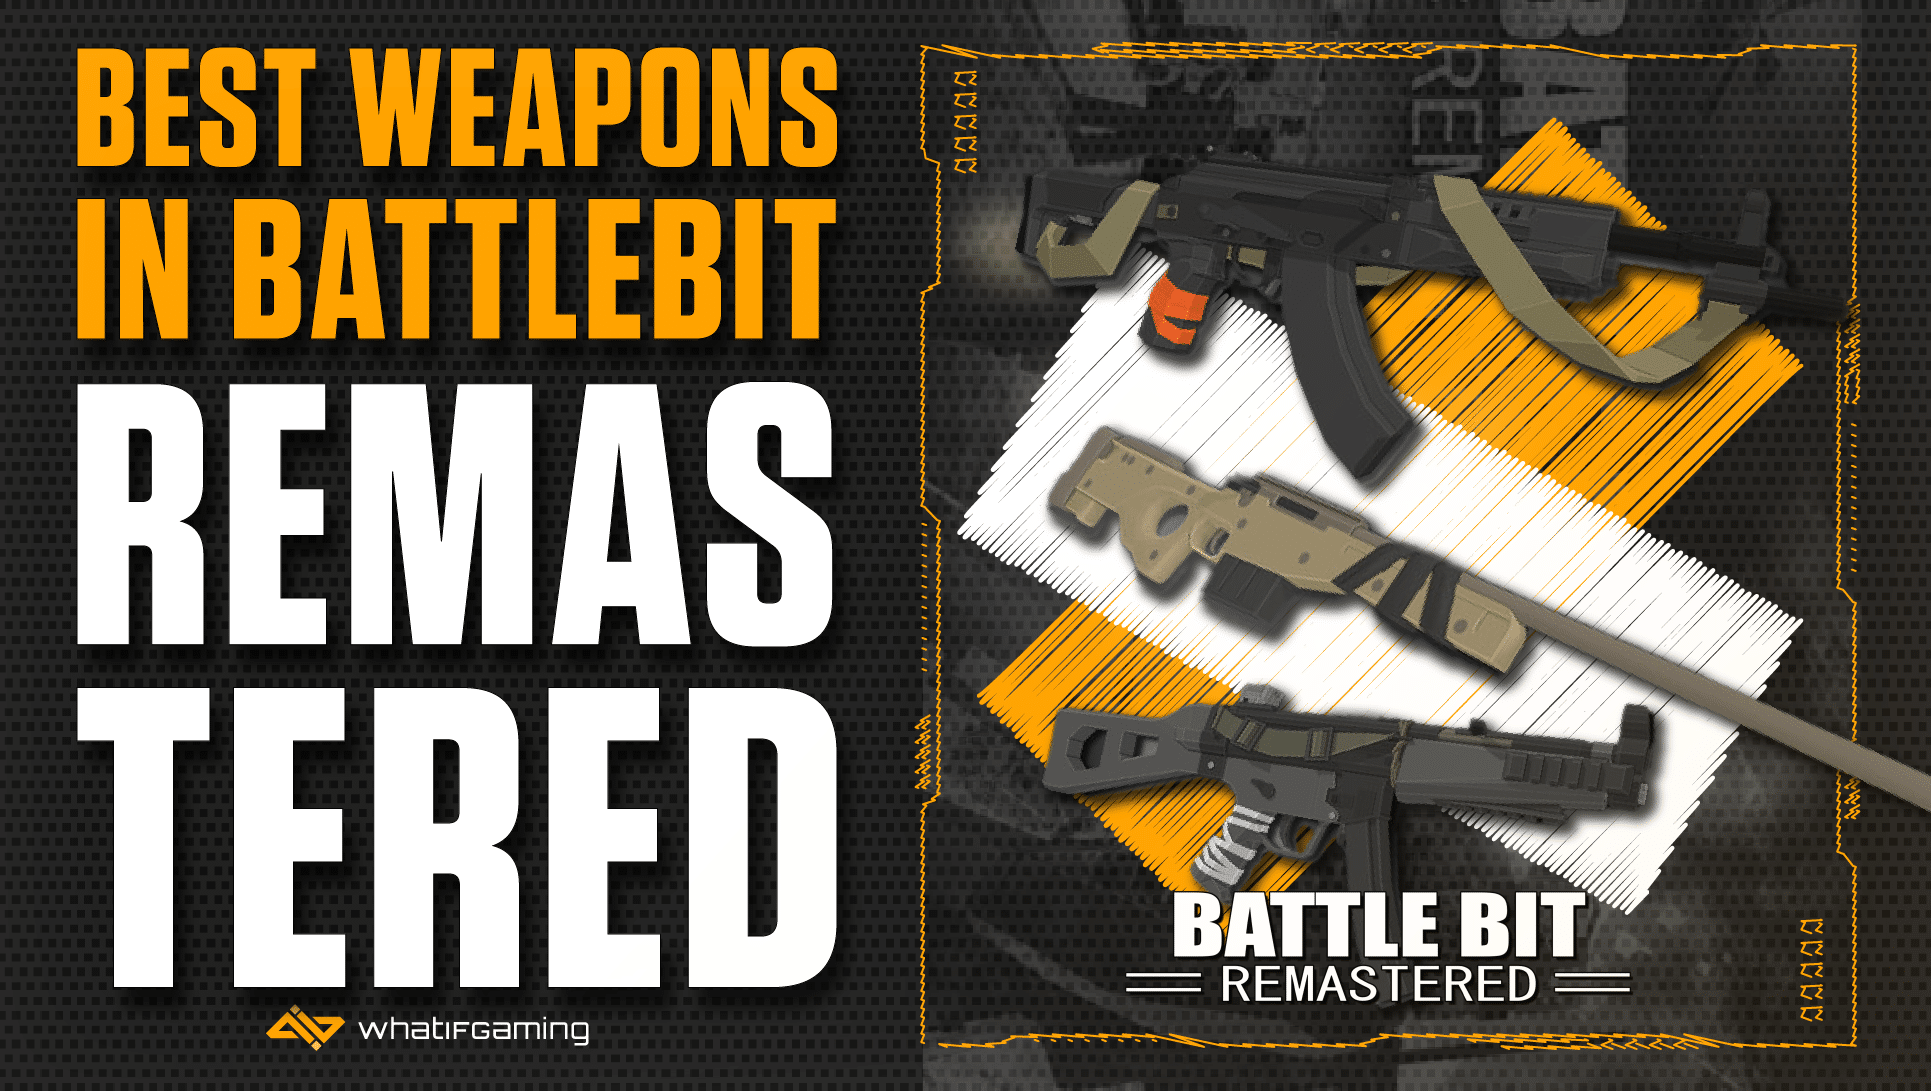 Battlebit Remastered Weapon Tier List